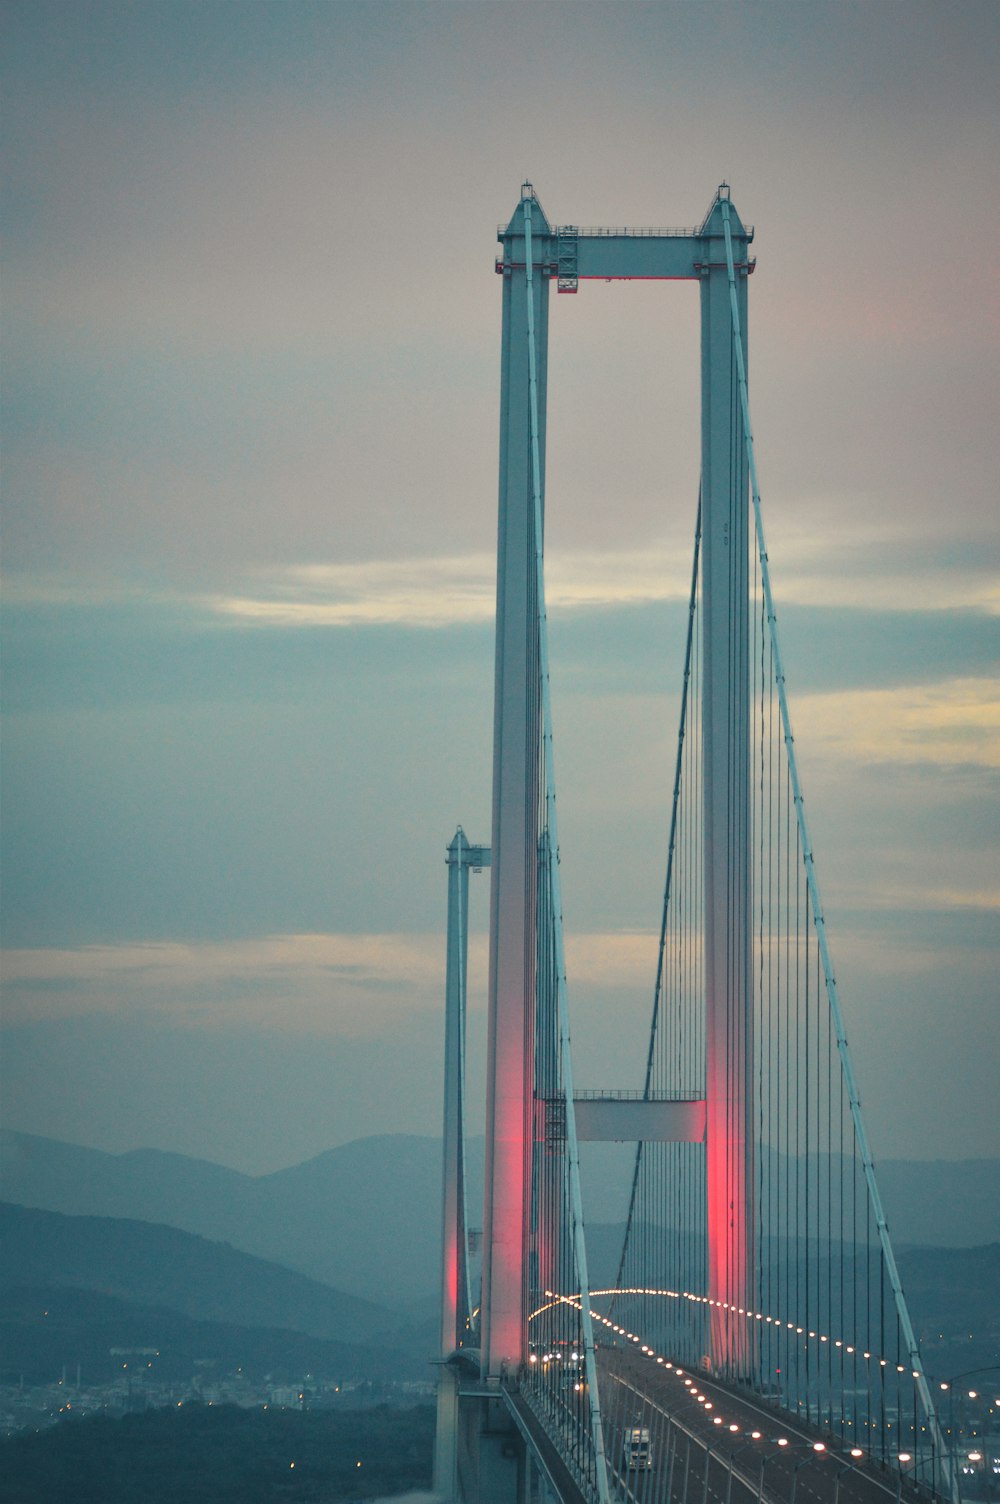 a large bridge with lights